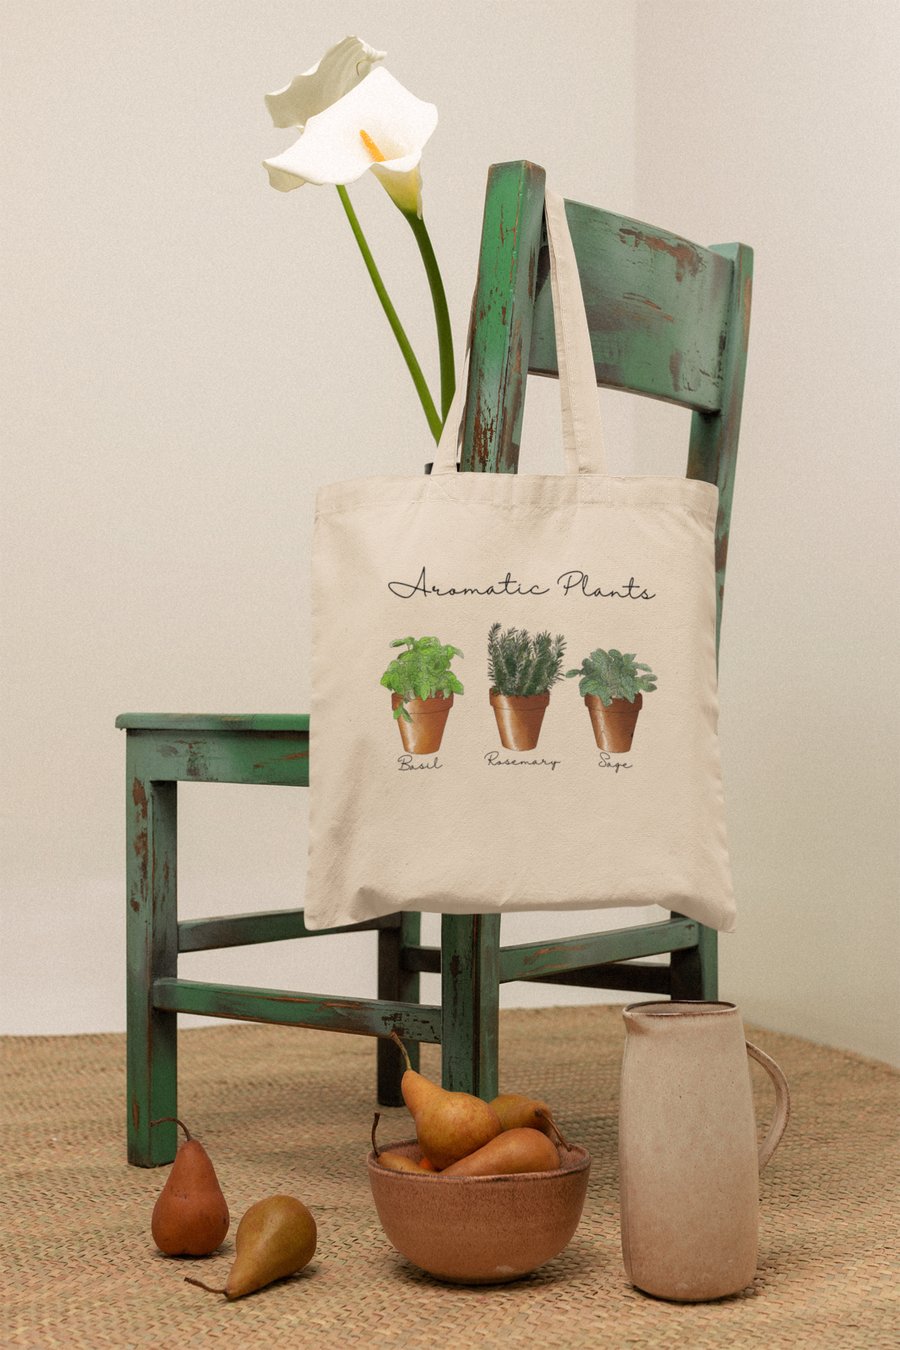 Aromatic Plants tote bag, Handmade tote bag, 100% Cotton